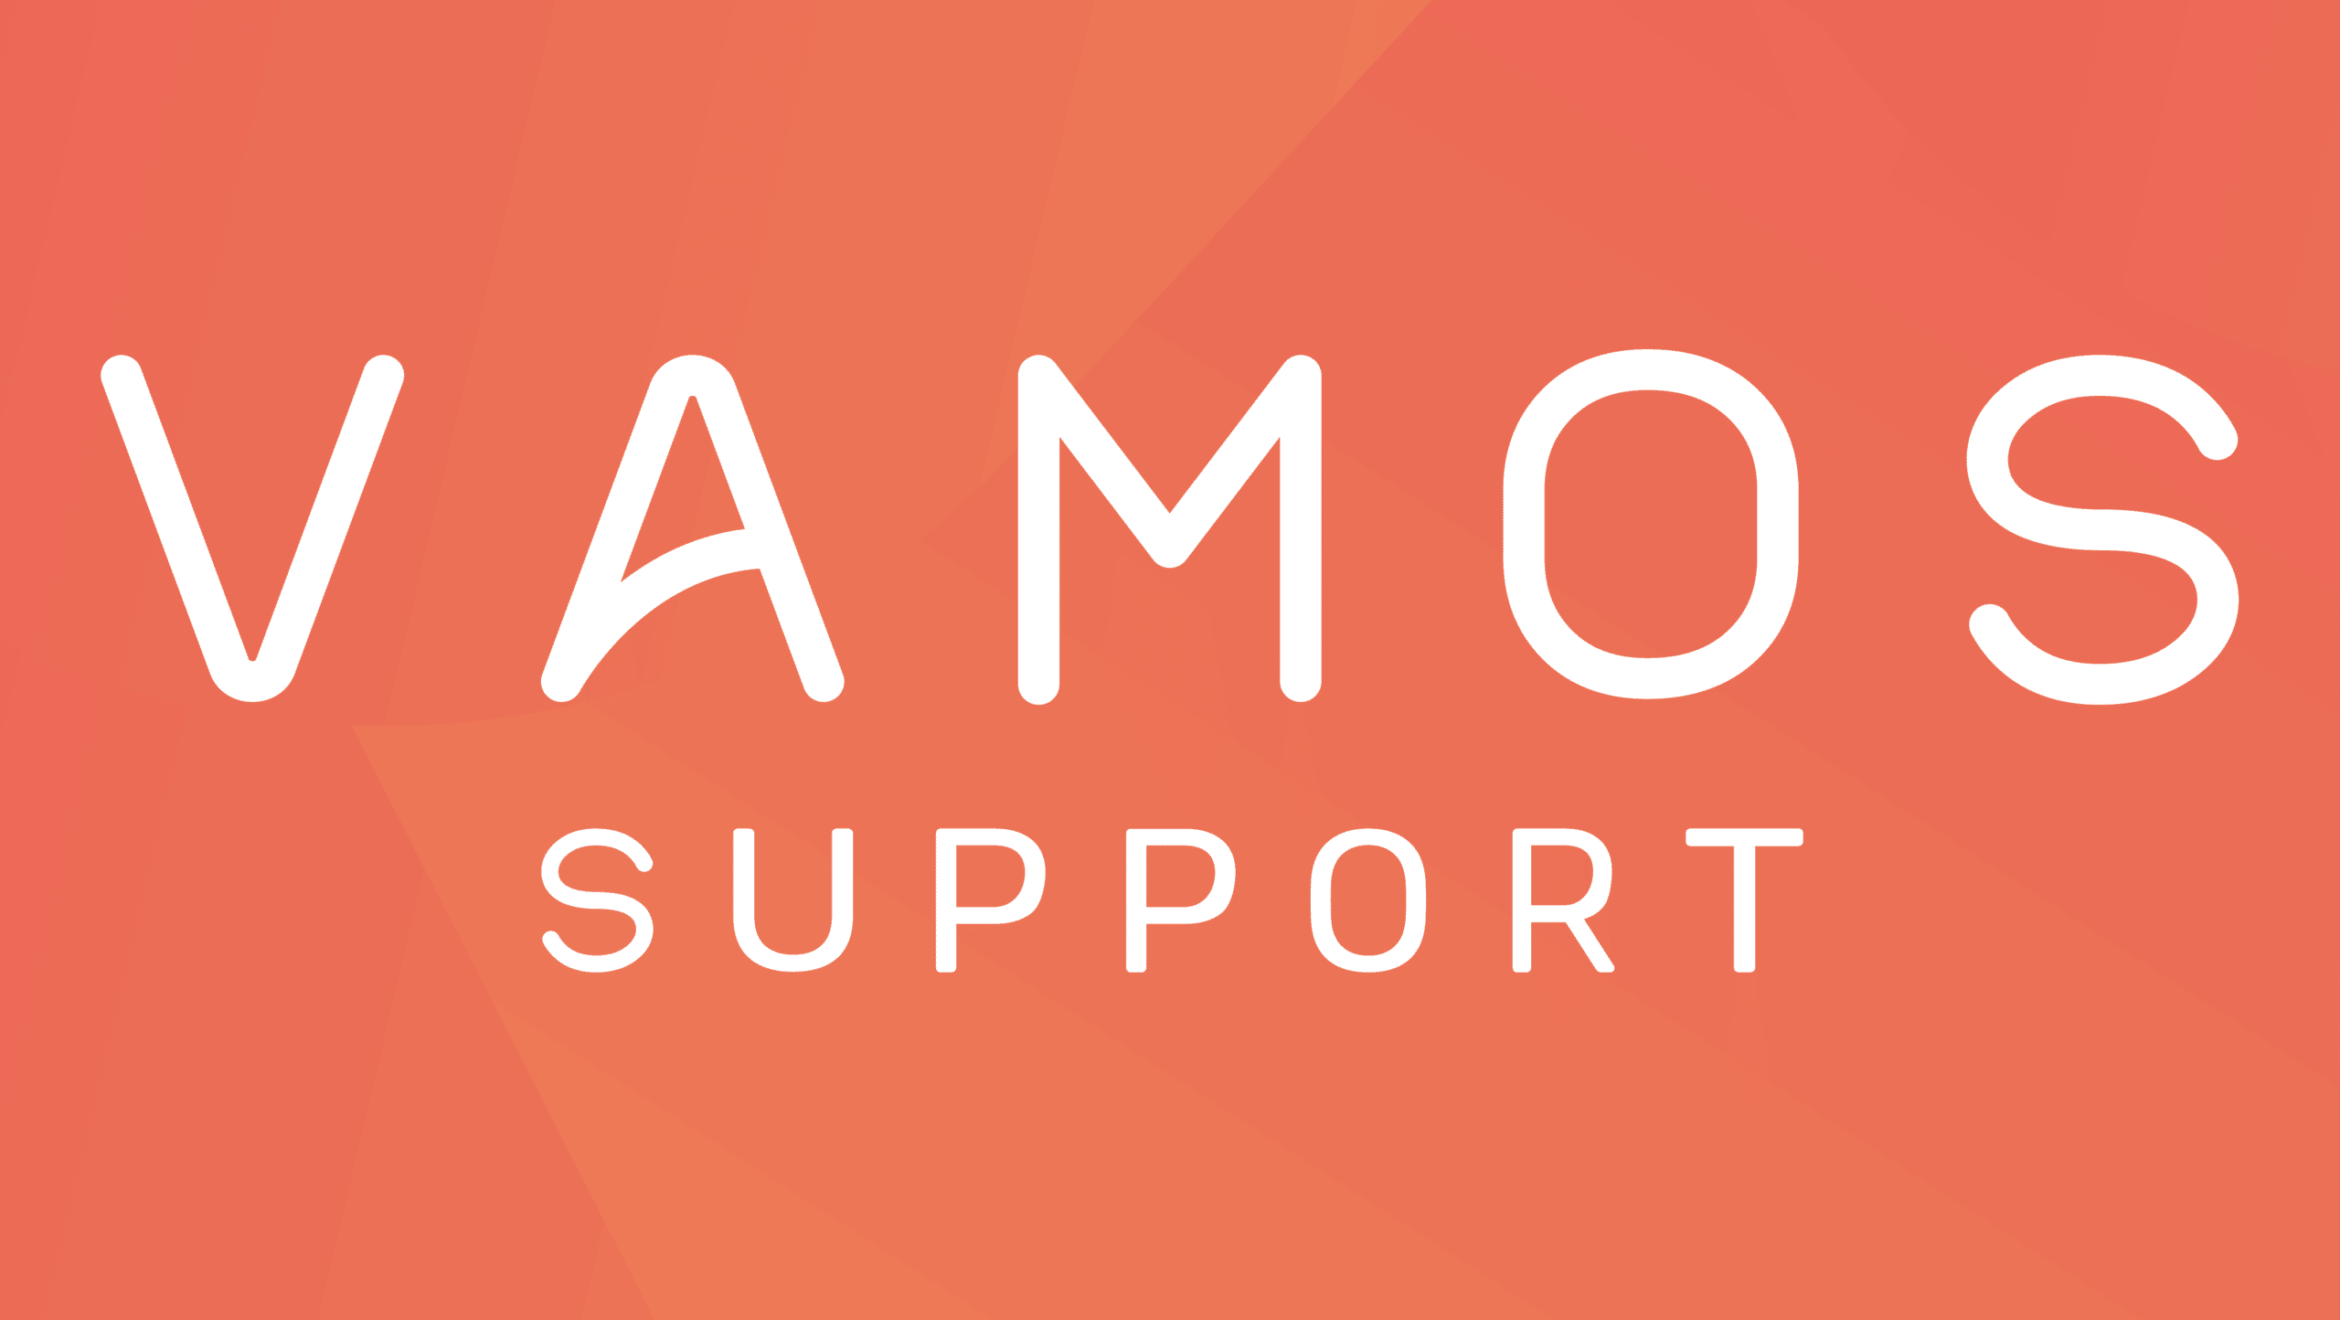 VAMOS support